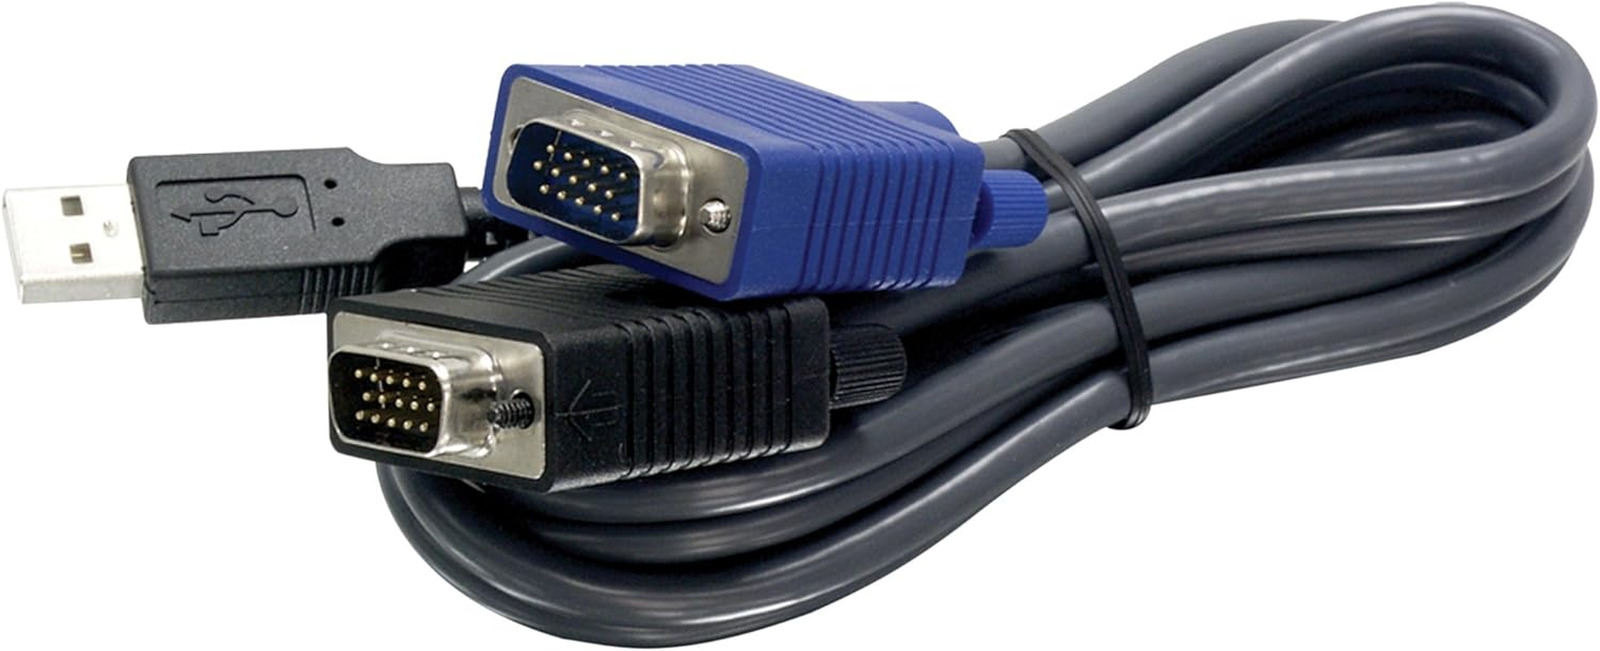 2-In-1 USB VGA KVM Cable, 1.83M (6 Feet), VGA-SVGA HDB 15-Pin Male To Male